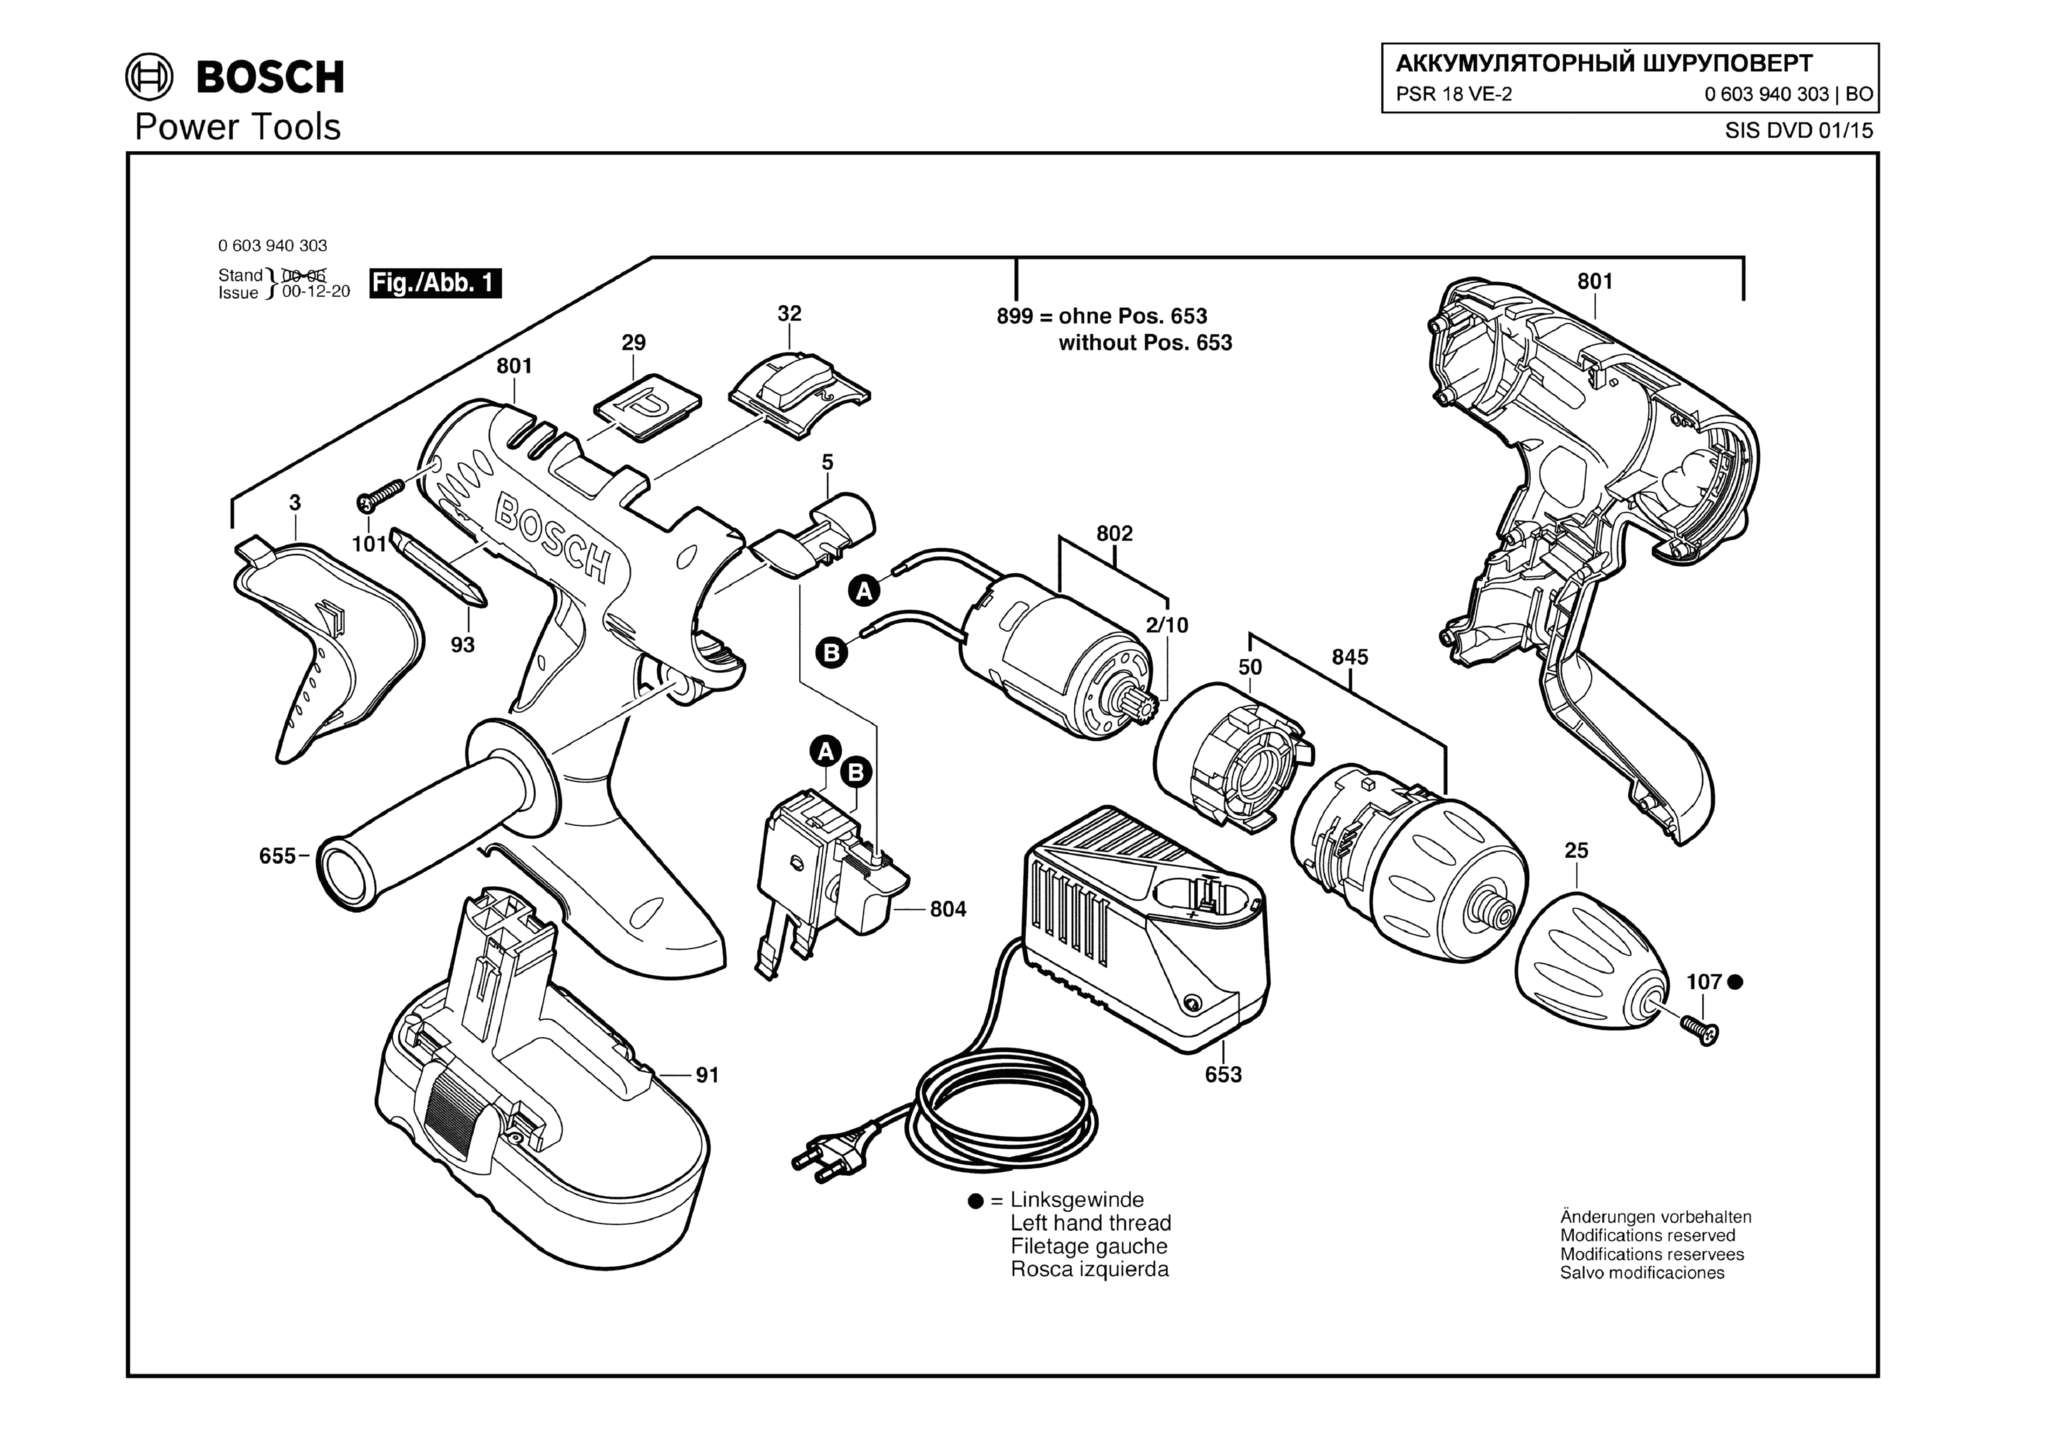 Запчасти, схема и деталировка Bosch PSR 18 VE-2 (ТИП 0603940303)